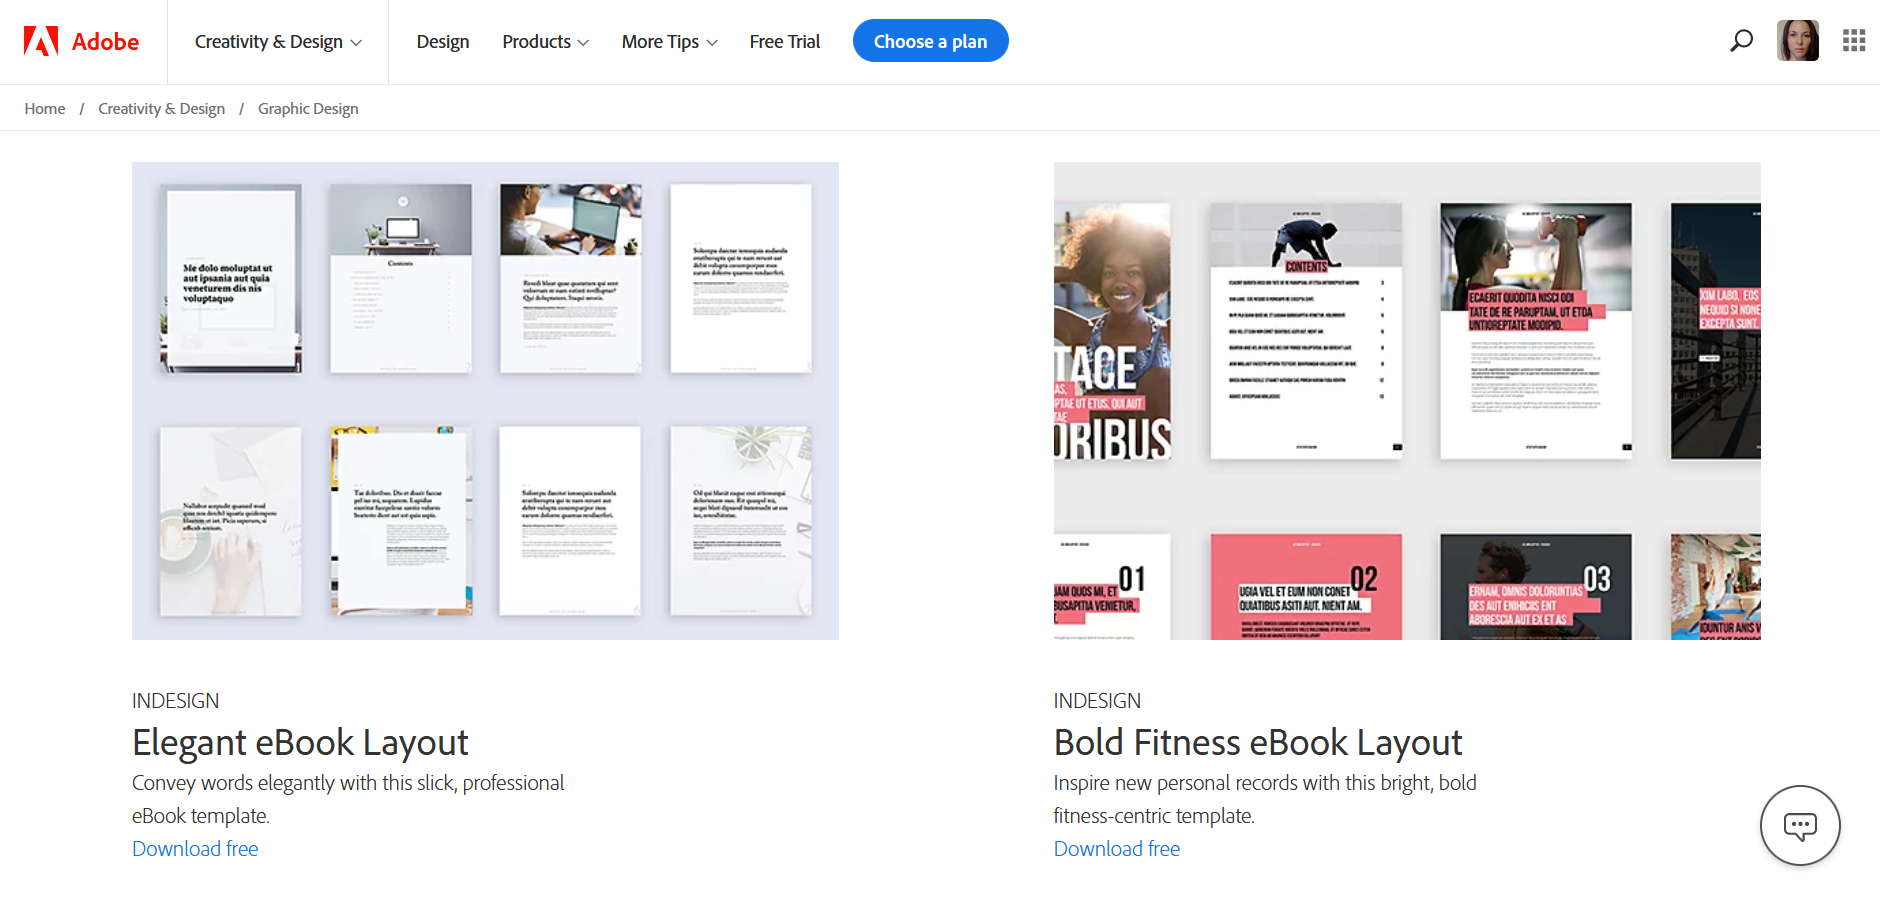 Adobe InDesign eBook Templates